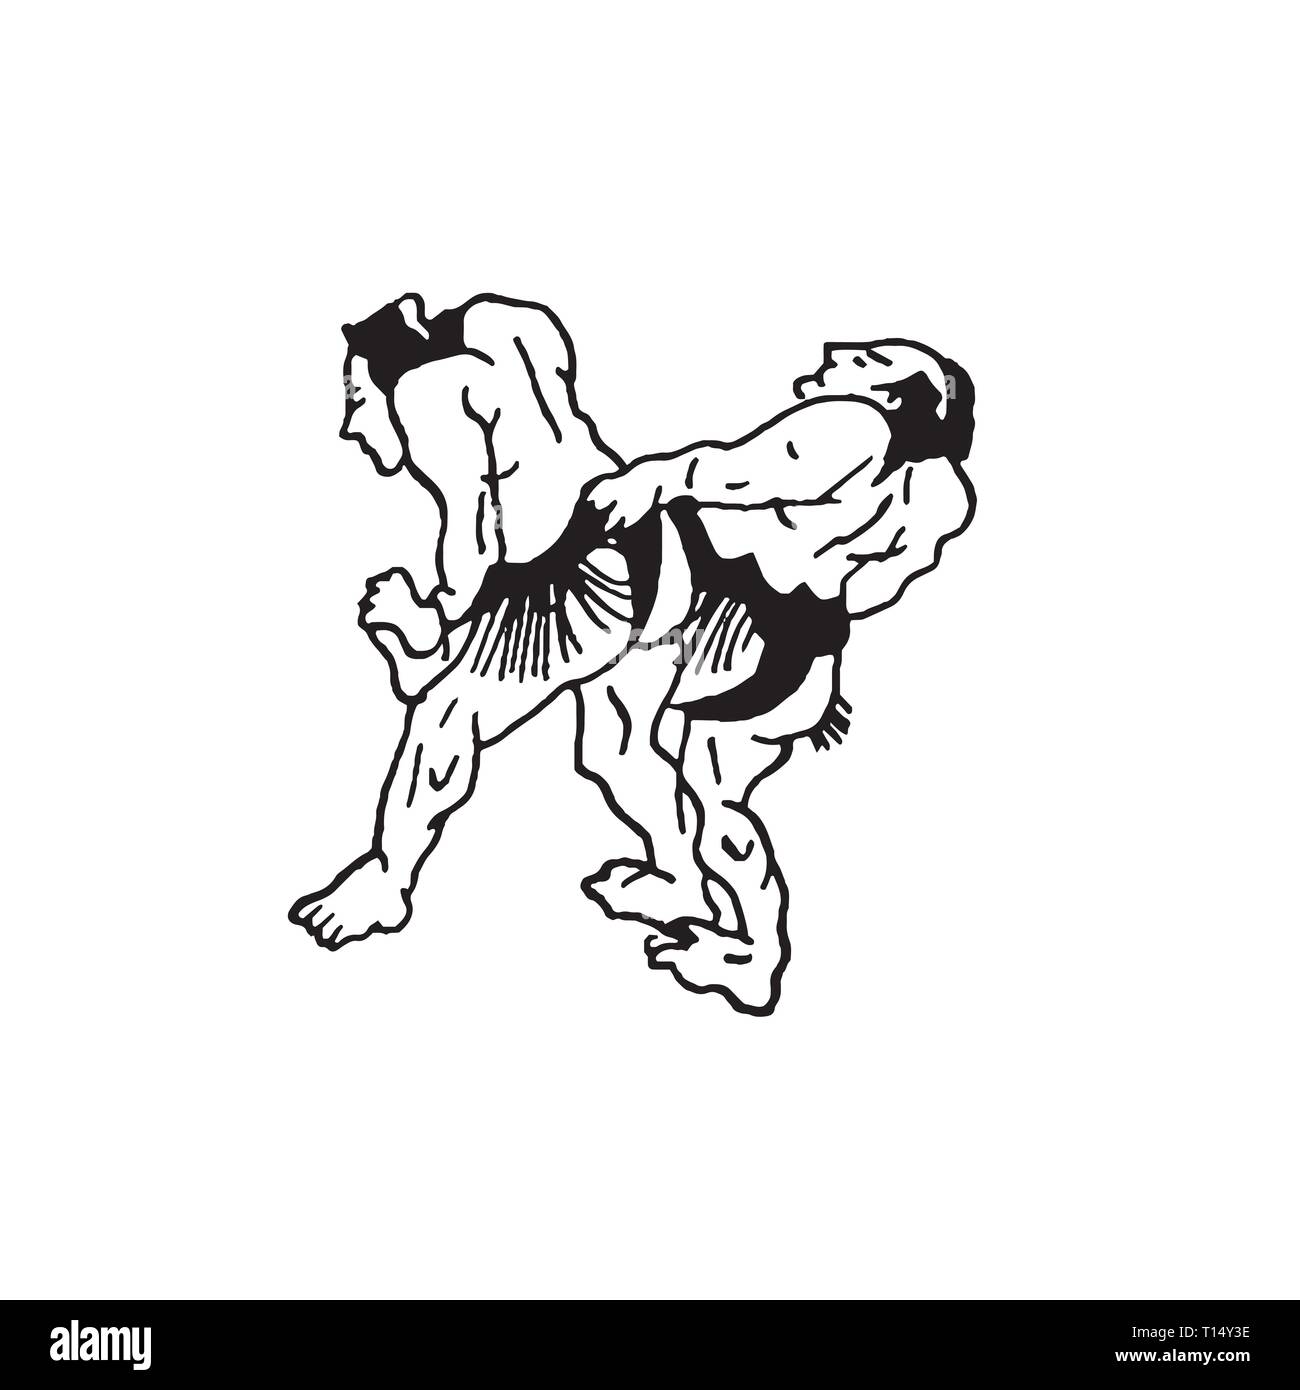 Wrestler Drawing PNG Transparent Images Free Download  Vector Files   Pngtree